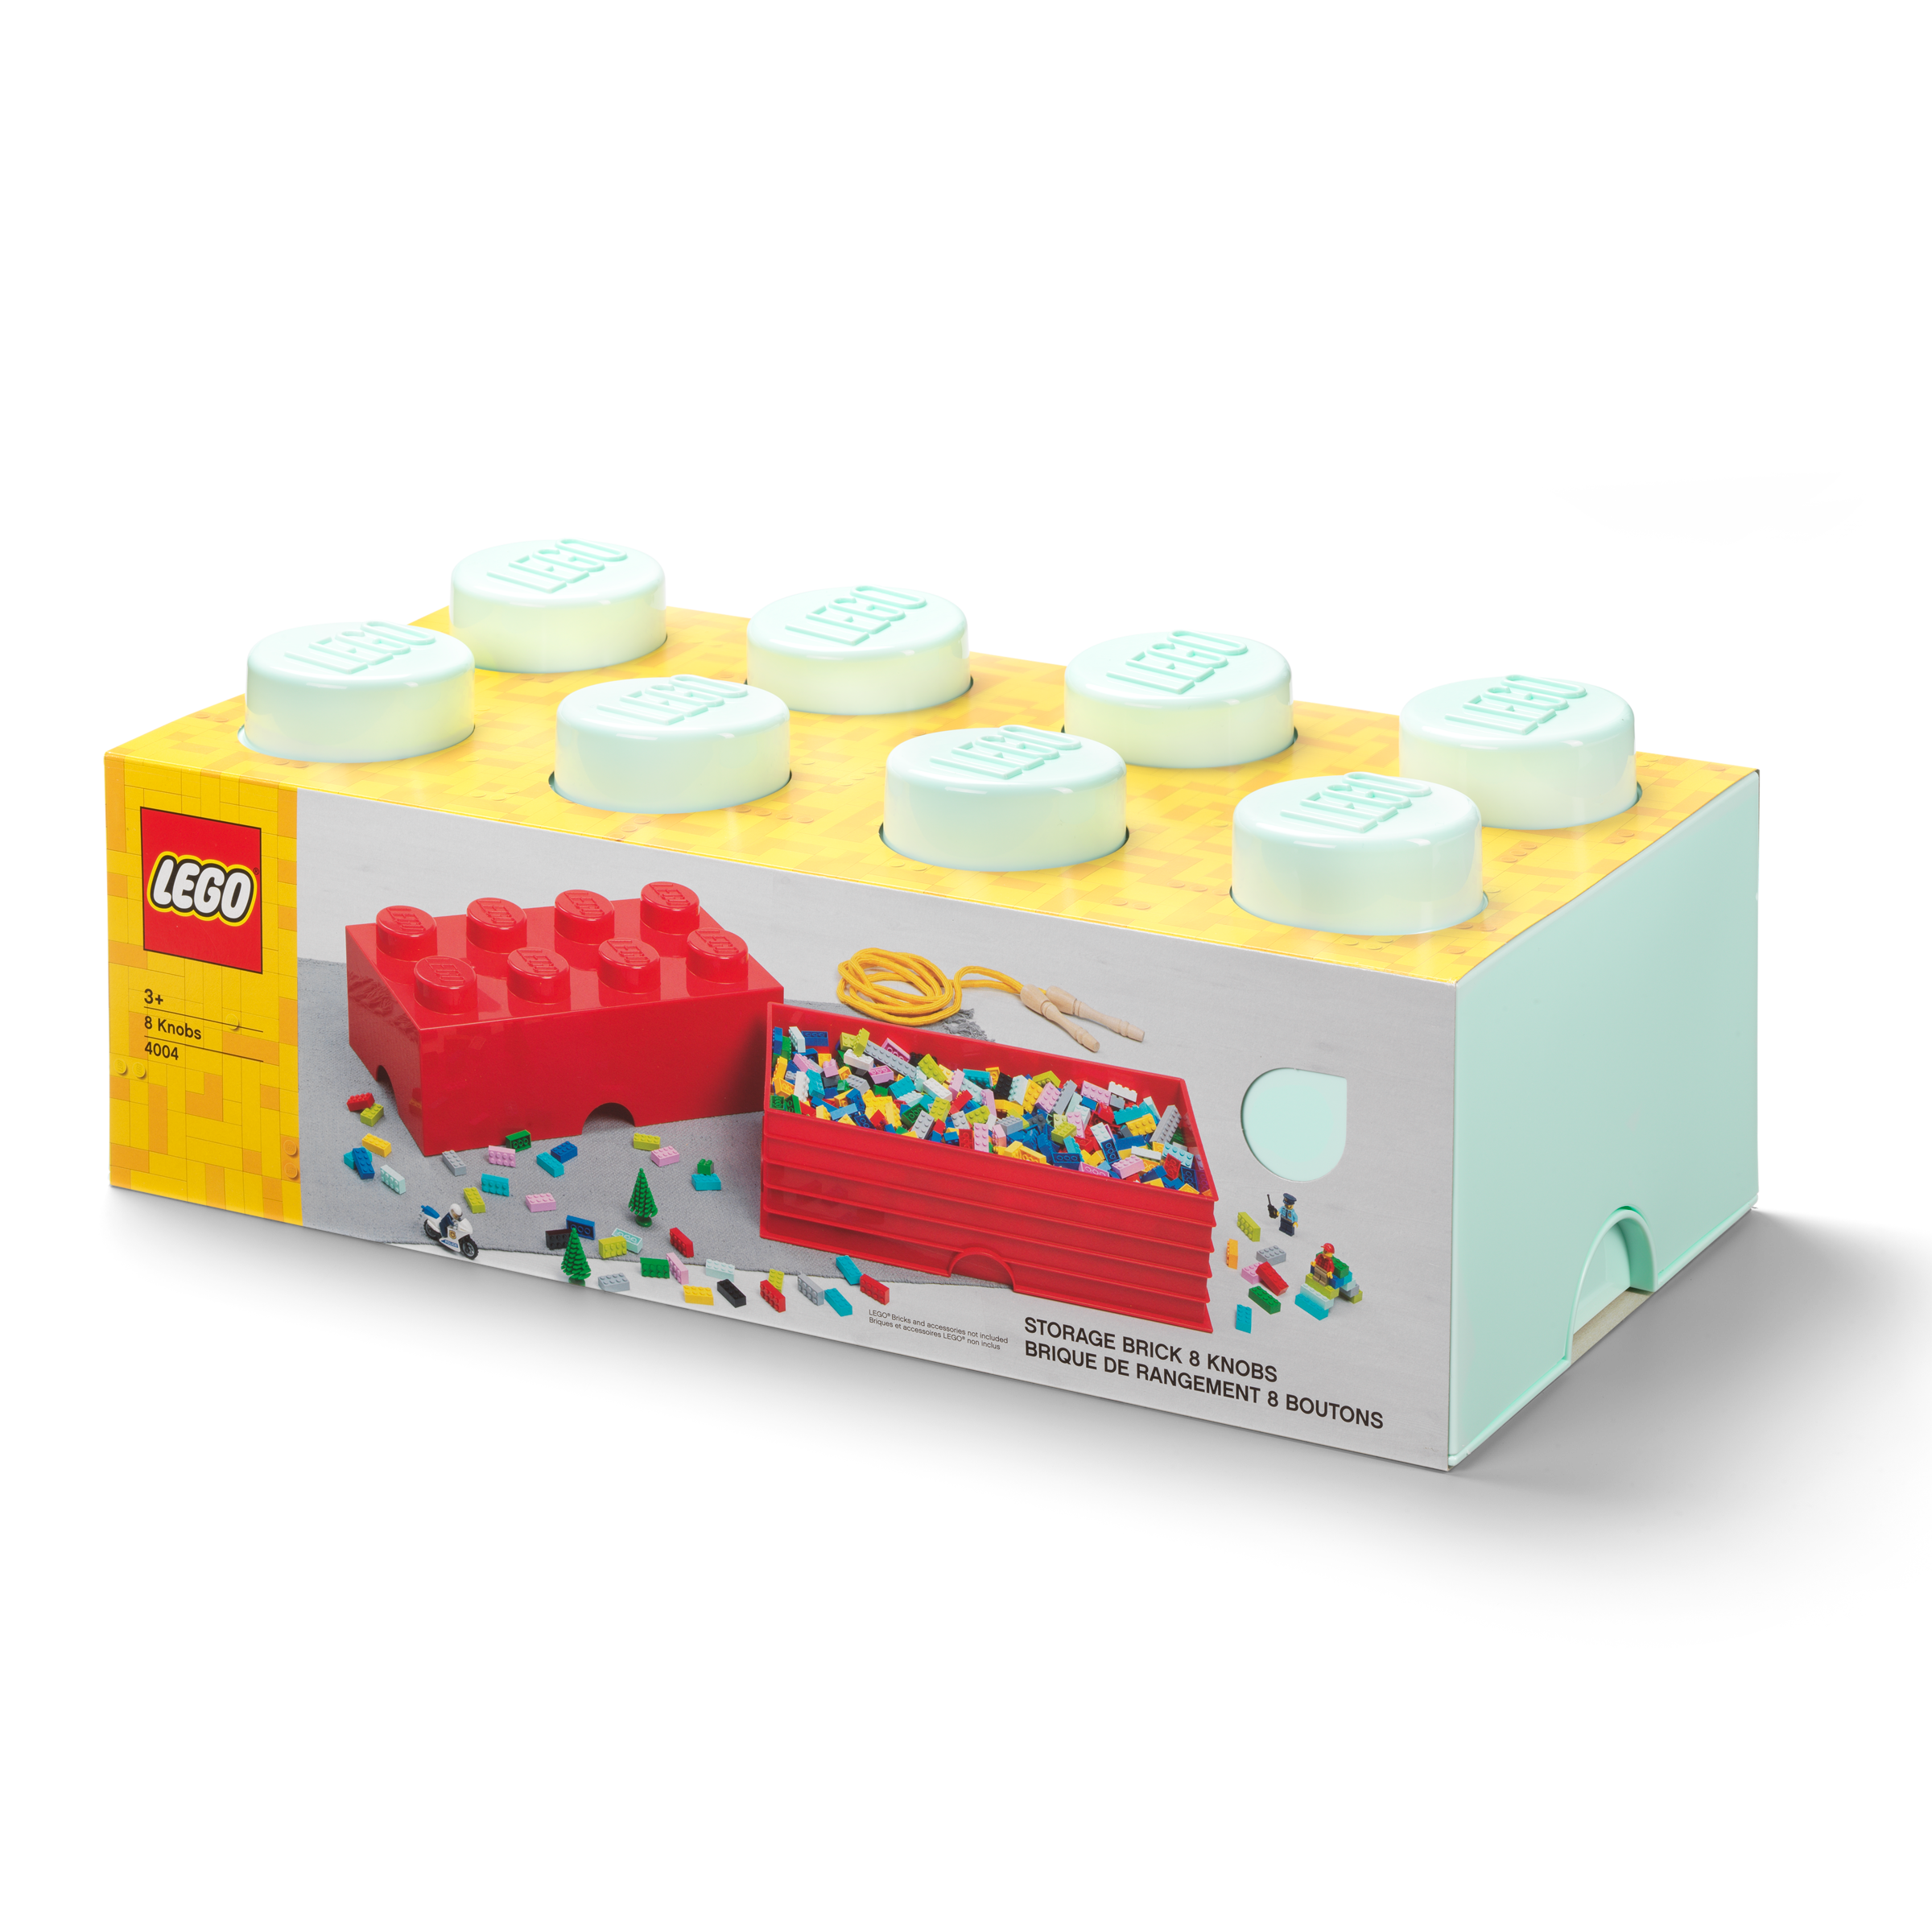 LEGO® 8-Stud Storage Brick – Aqua Blue 5005721, Other